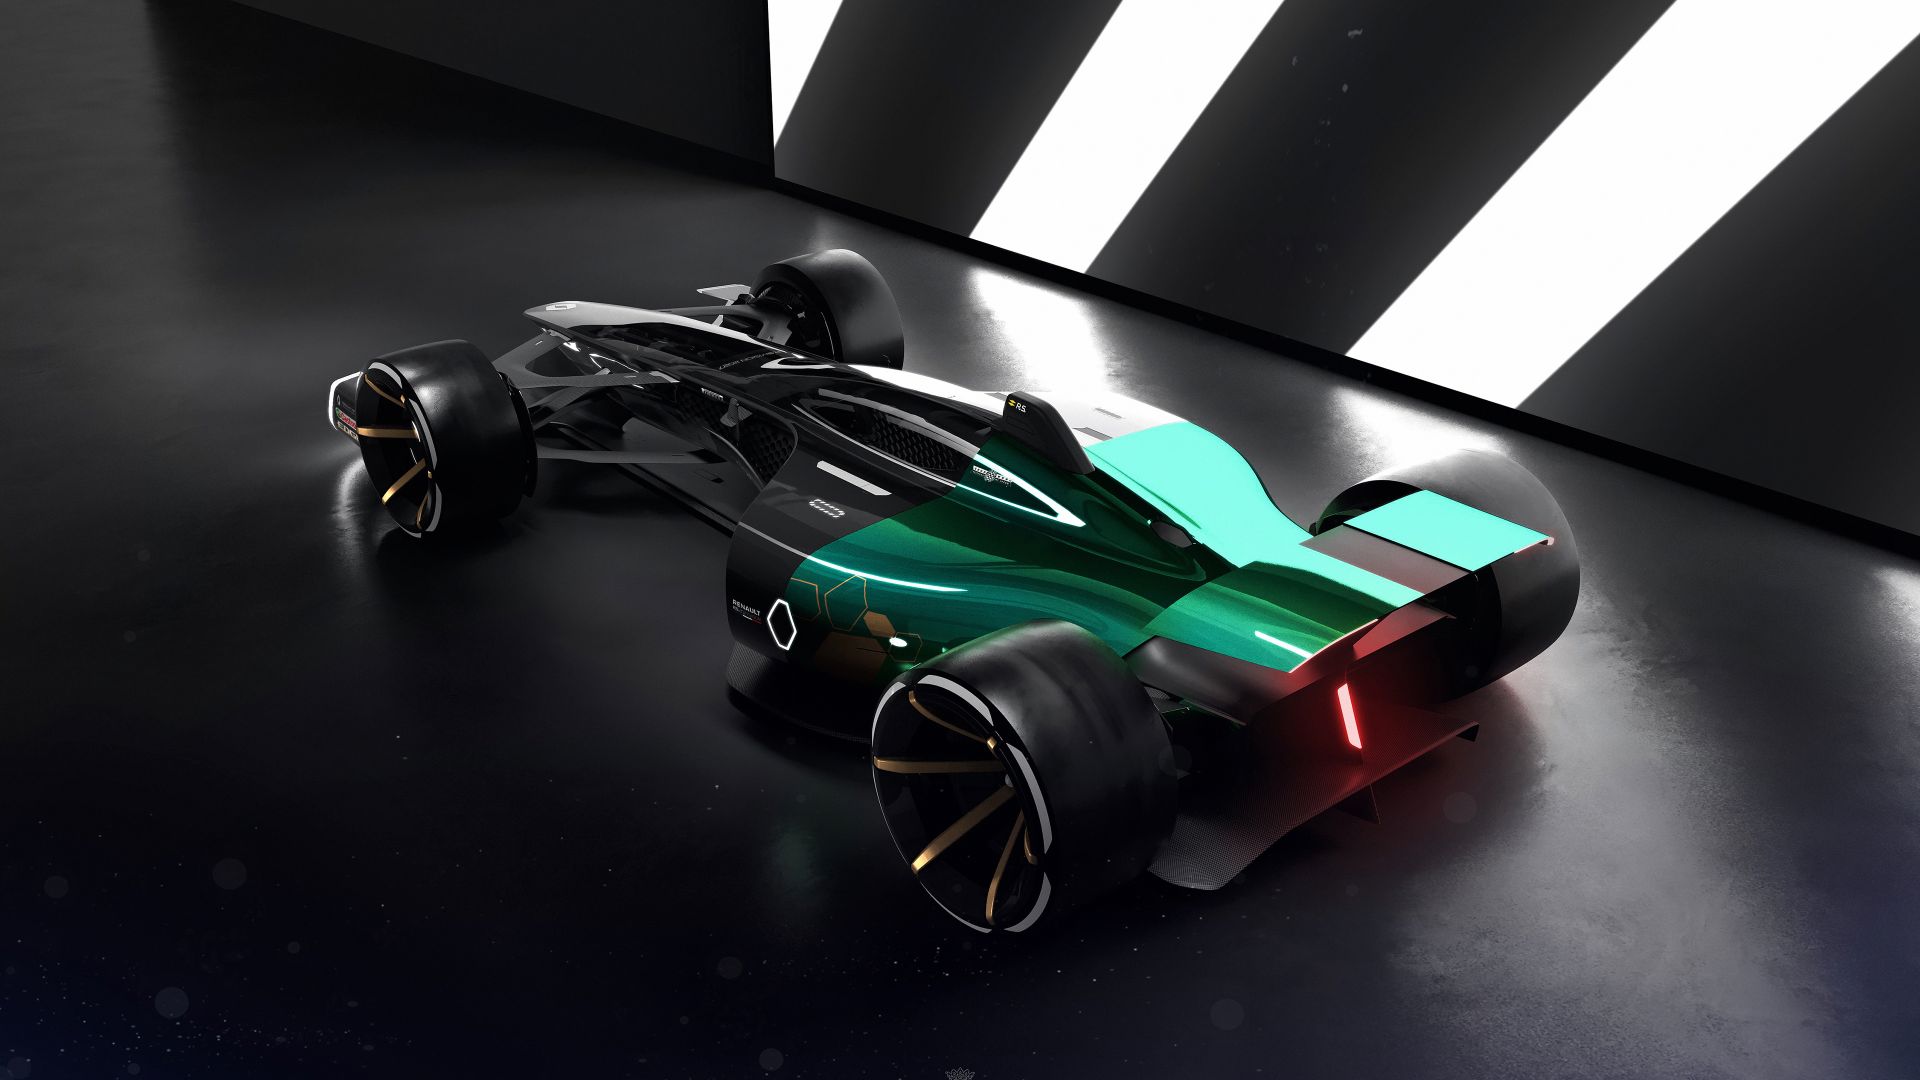 Wallpaper Renault R.S. 2027, F1 Vision concept car, Formula One